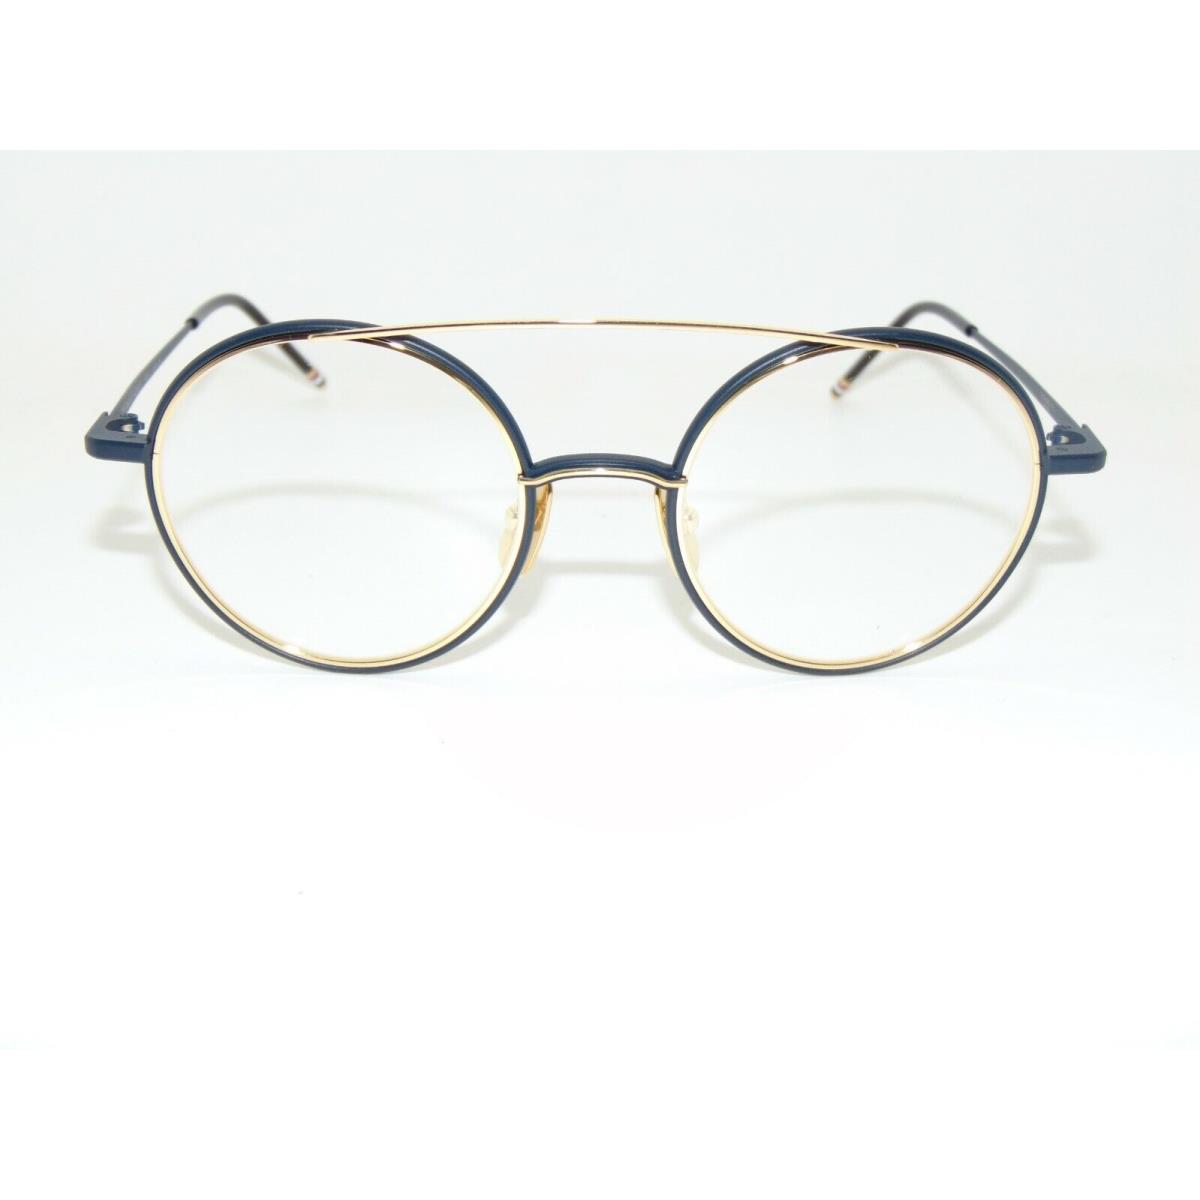 Thom Browne TB-108-C-NVY-GLD Navy Blue/gold 50mm Eyeglasses